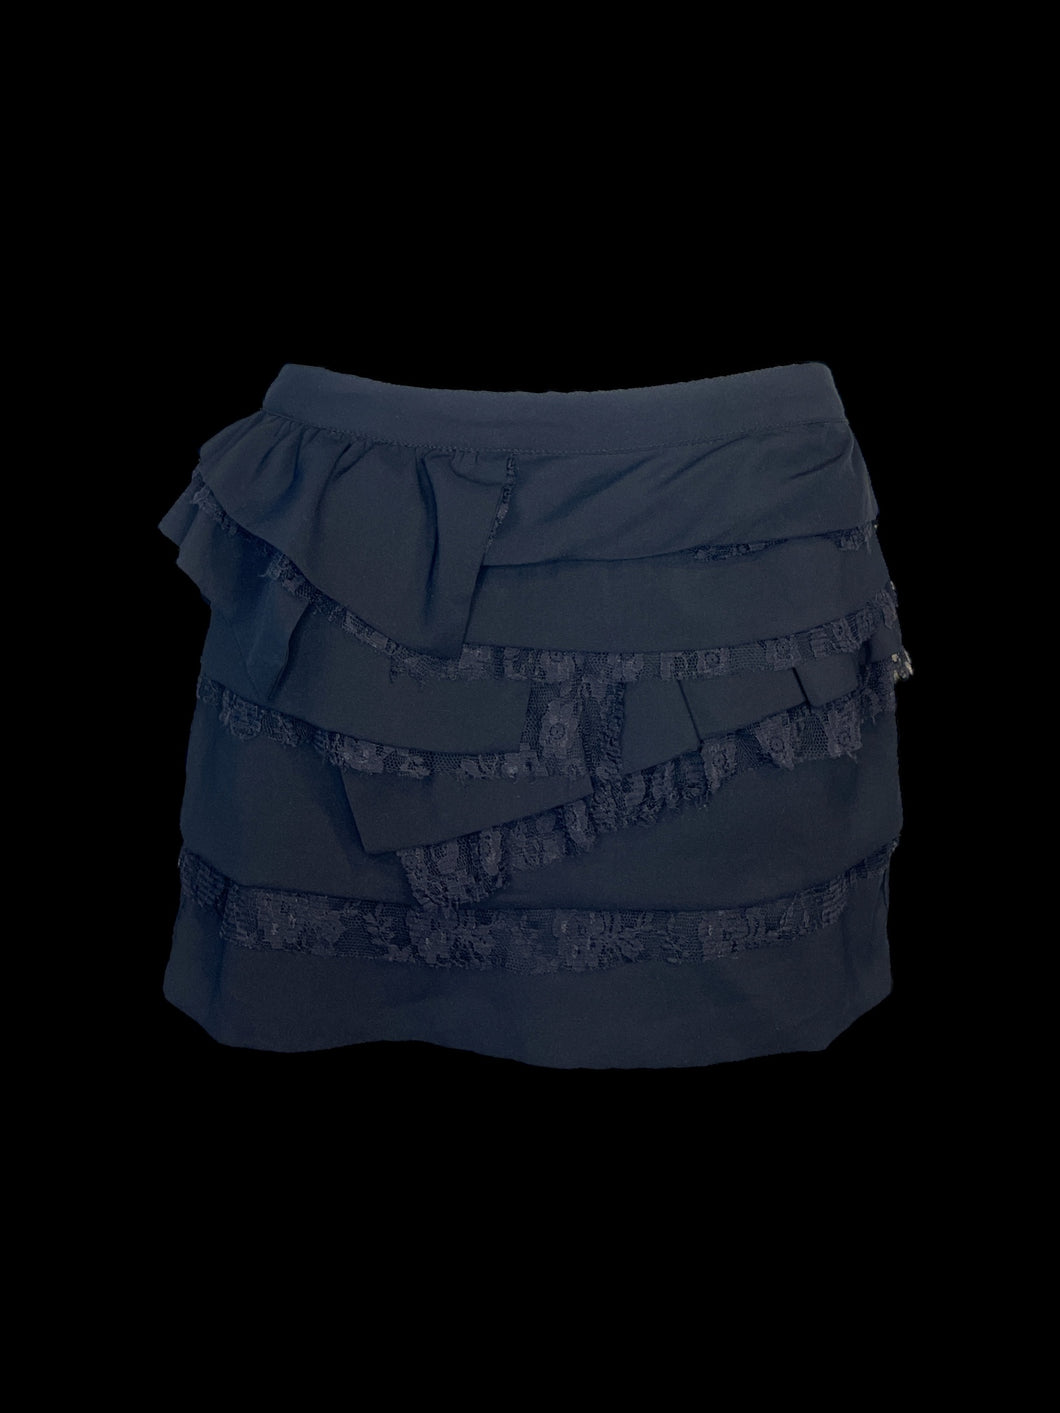 S Black asymmetric tiered ruffle skirt w/ lace details, & clasp/zipper closure